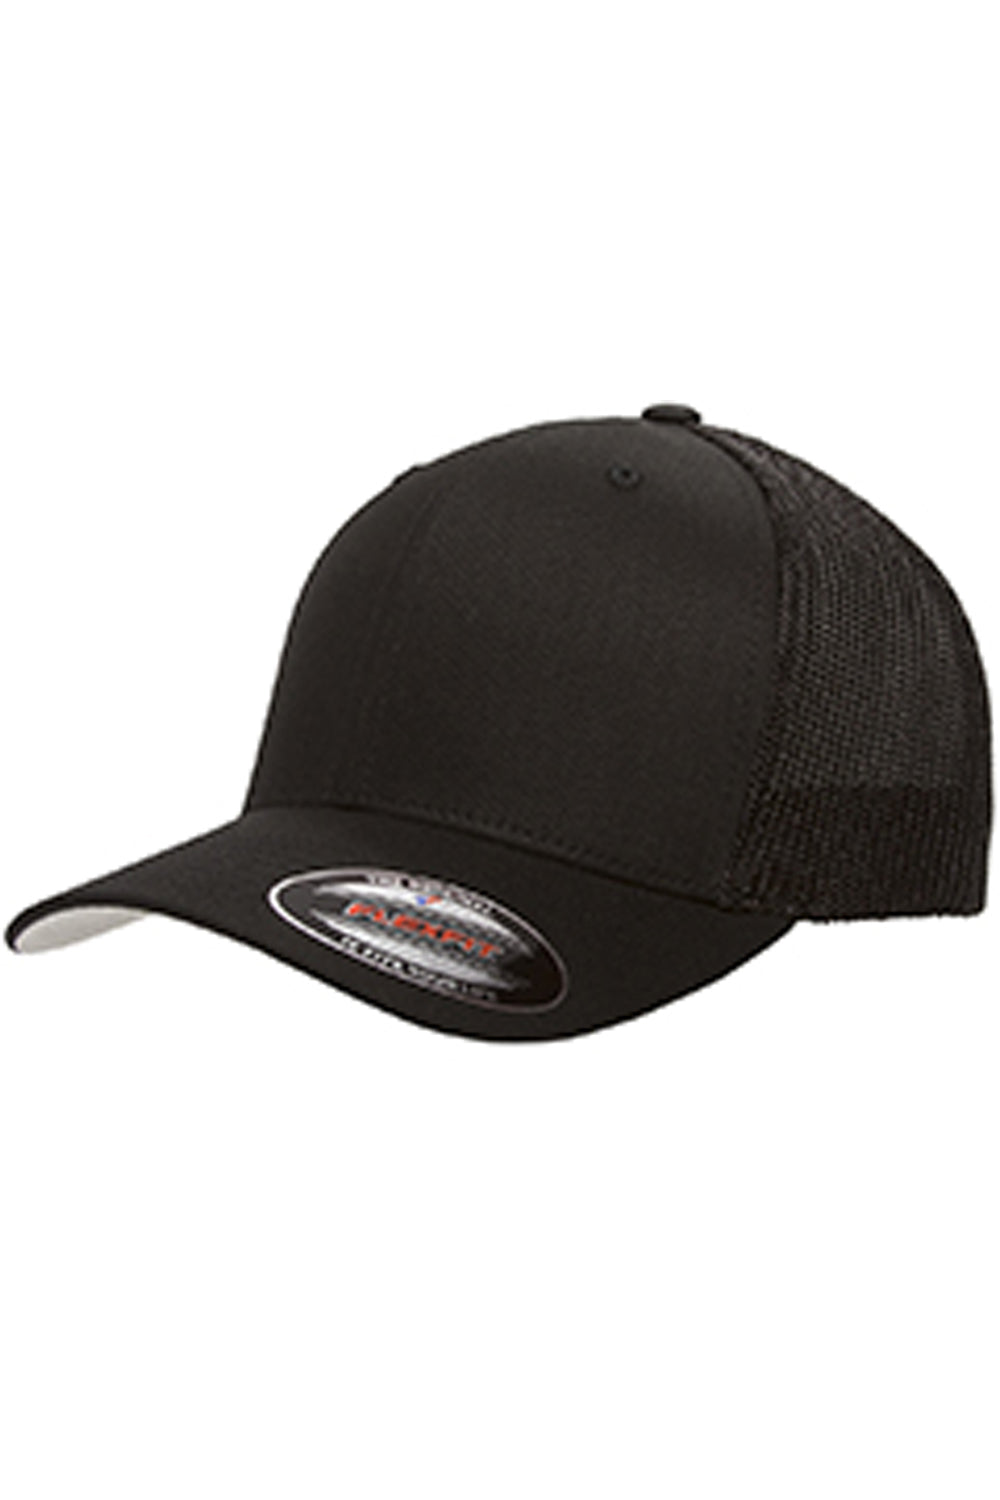 Flexfit 6511 Mens Stretch Fit Trucker Hat Black Front